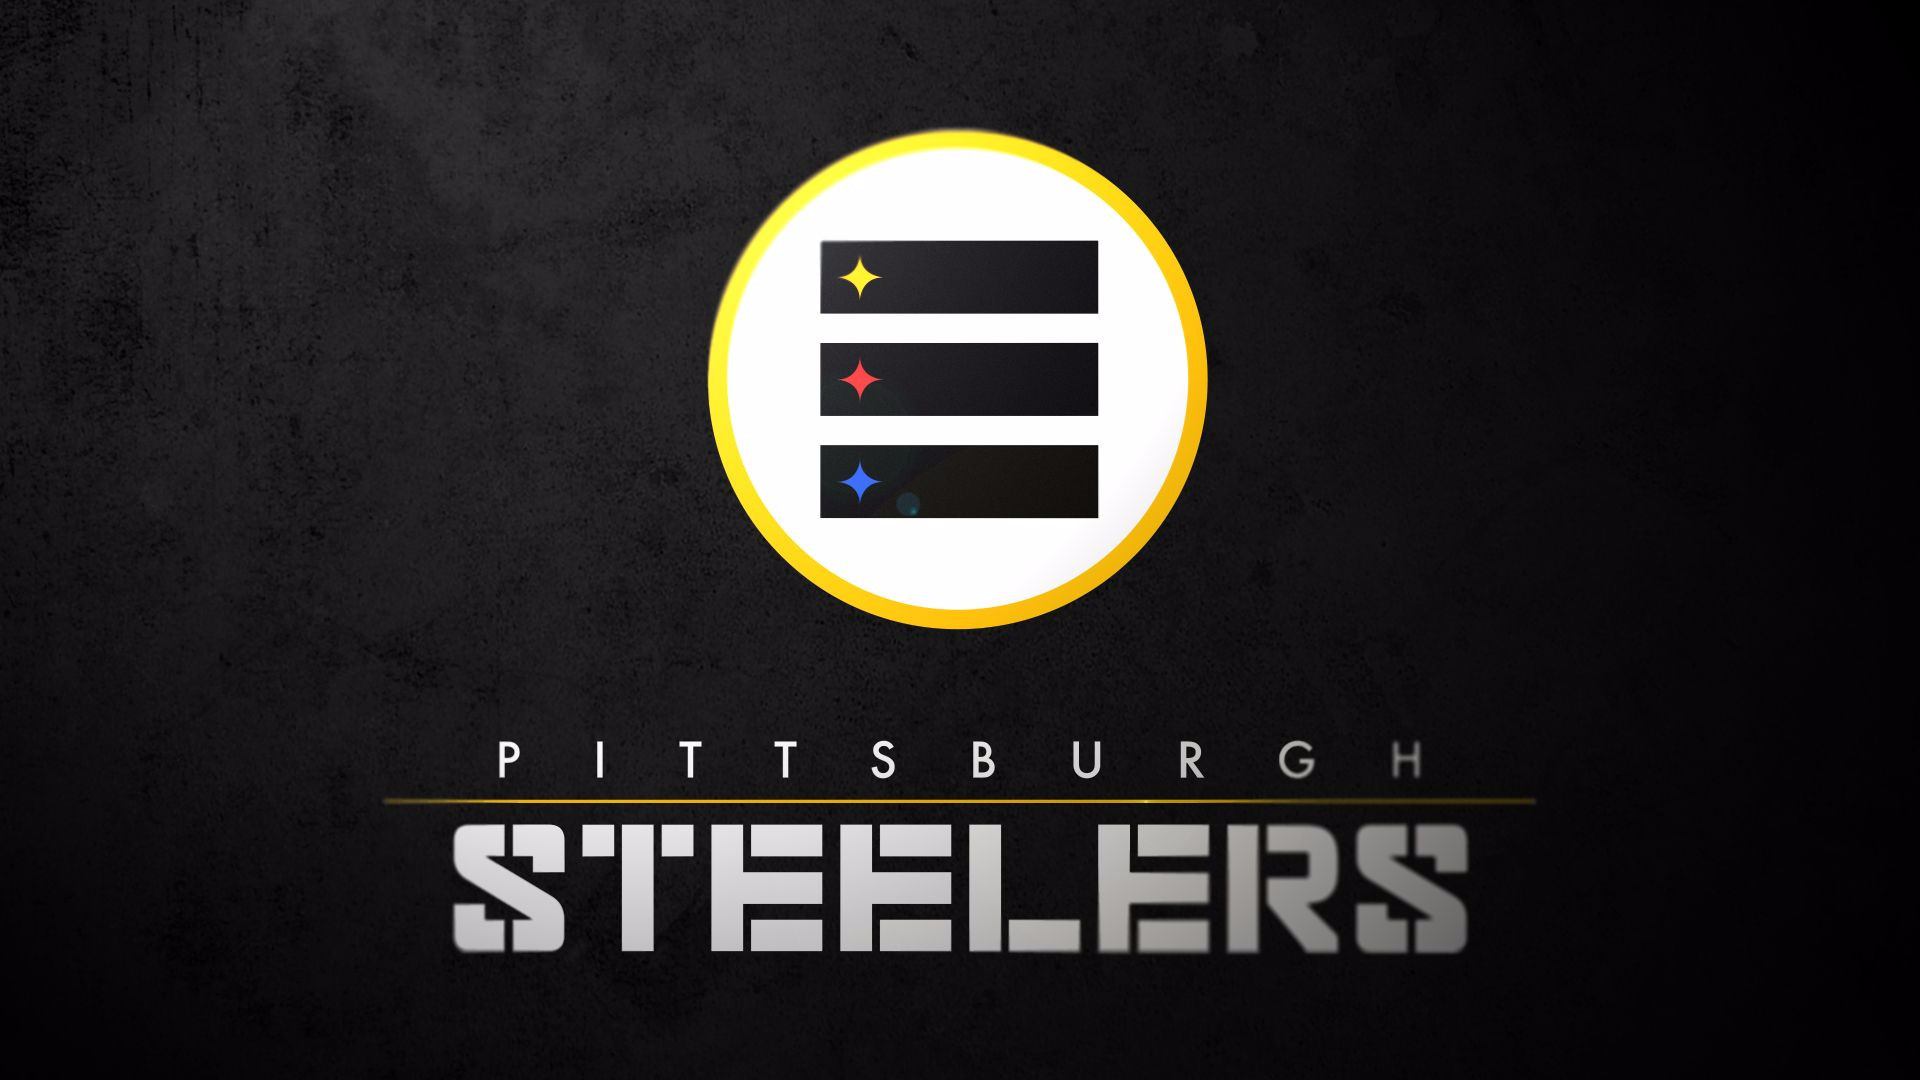 1920x1080, Pittsburgh Steelers Logo Wallpaper Hd Pixelstalk - Logos And  Uniforms Of The Pittsburgh Steelers - 1920x1080 Wallpaper 